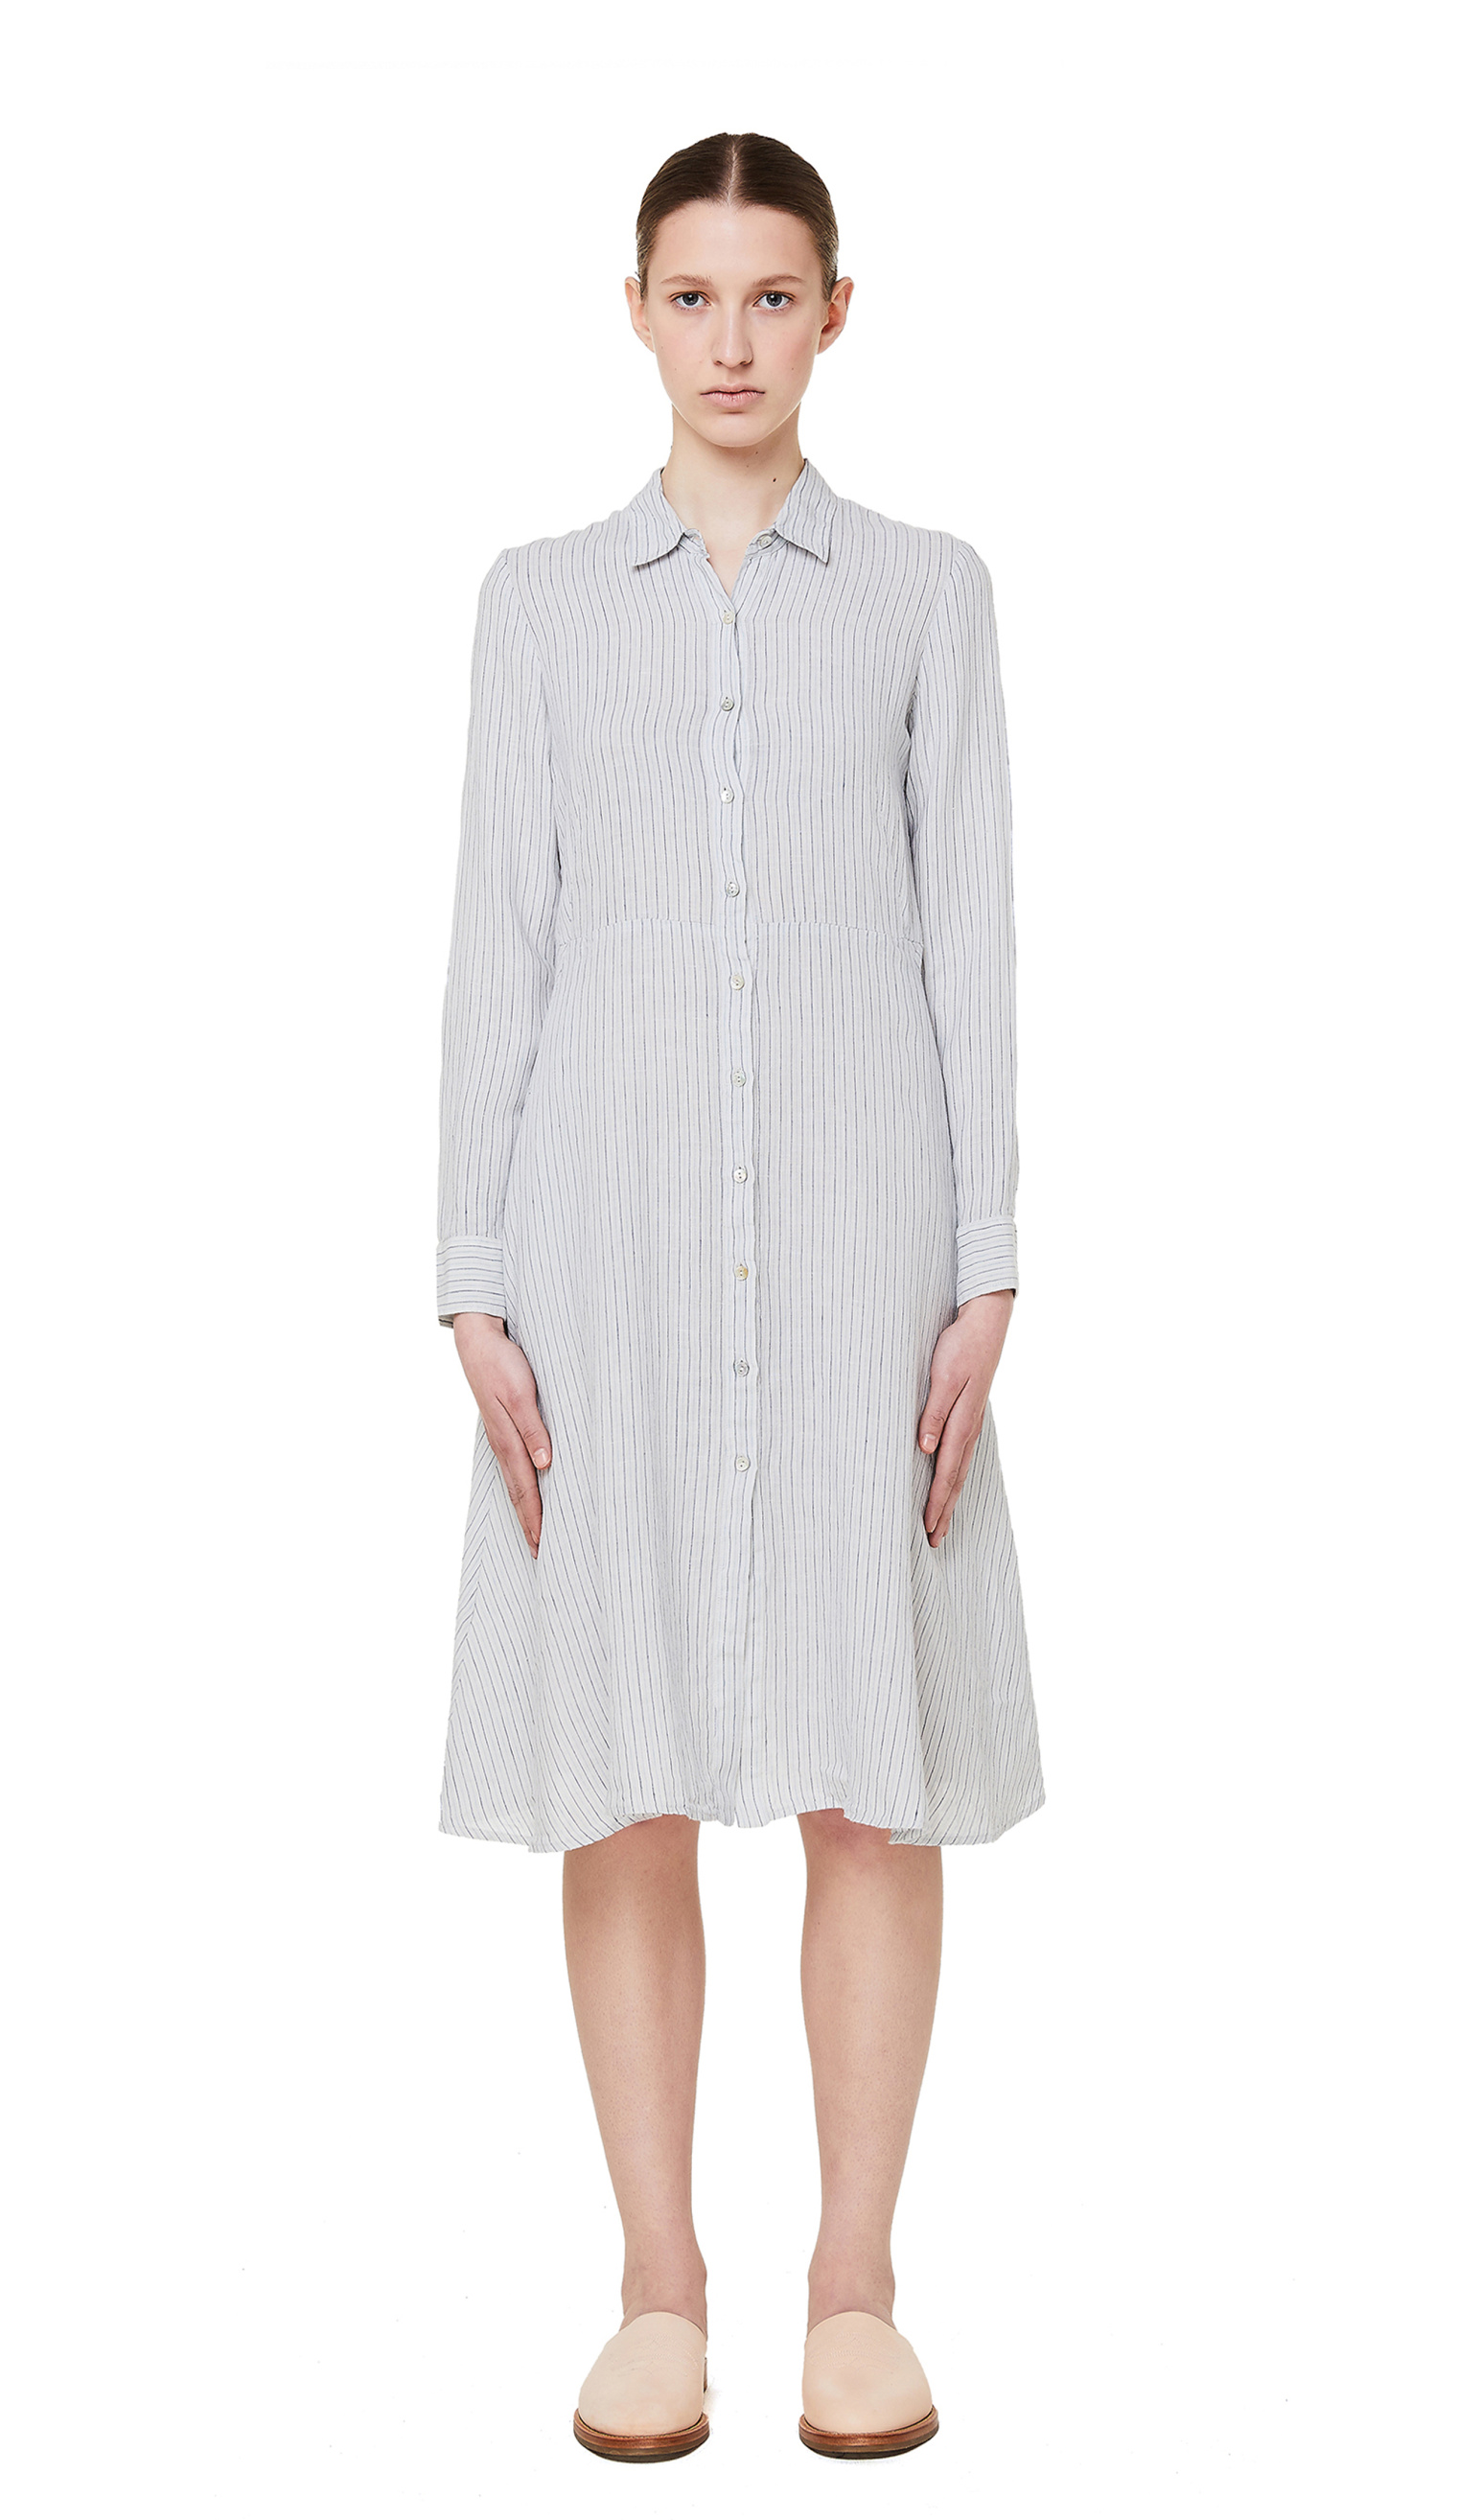 120% Lino Grey Striped Linen Dress